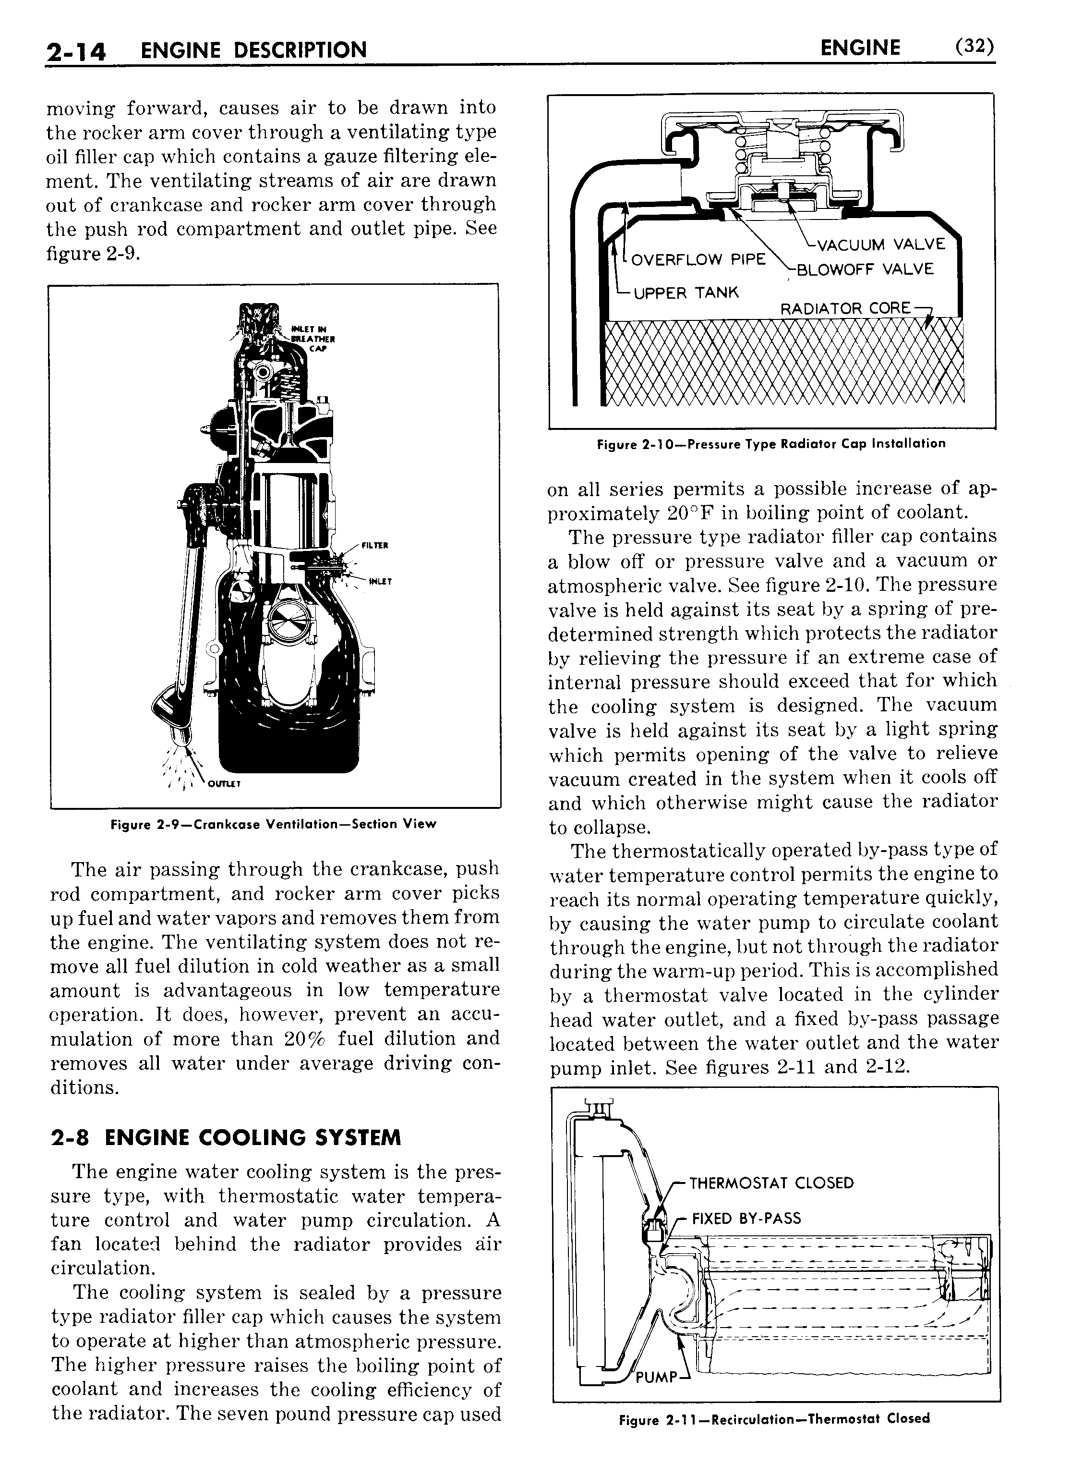 n_03 1951 Buick Shop Manual - Engine-014-014.jpg